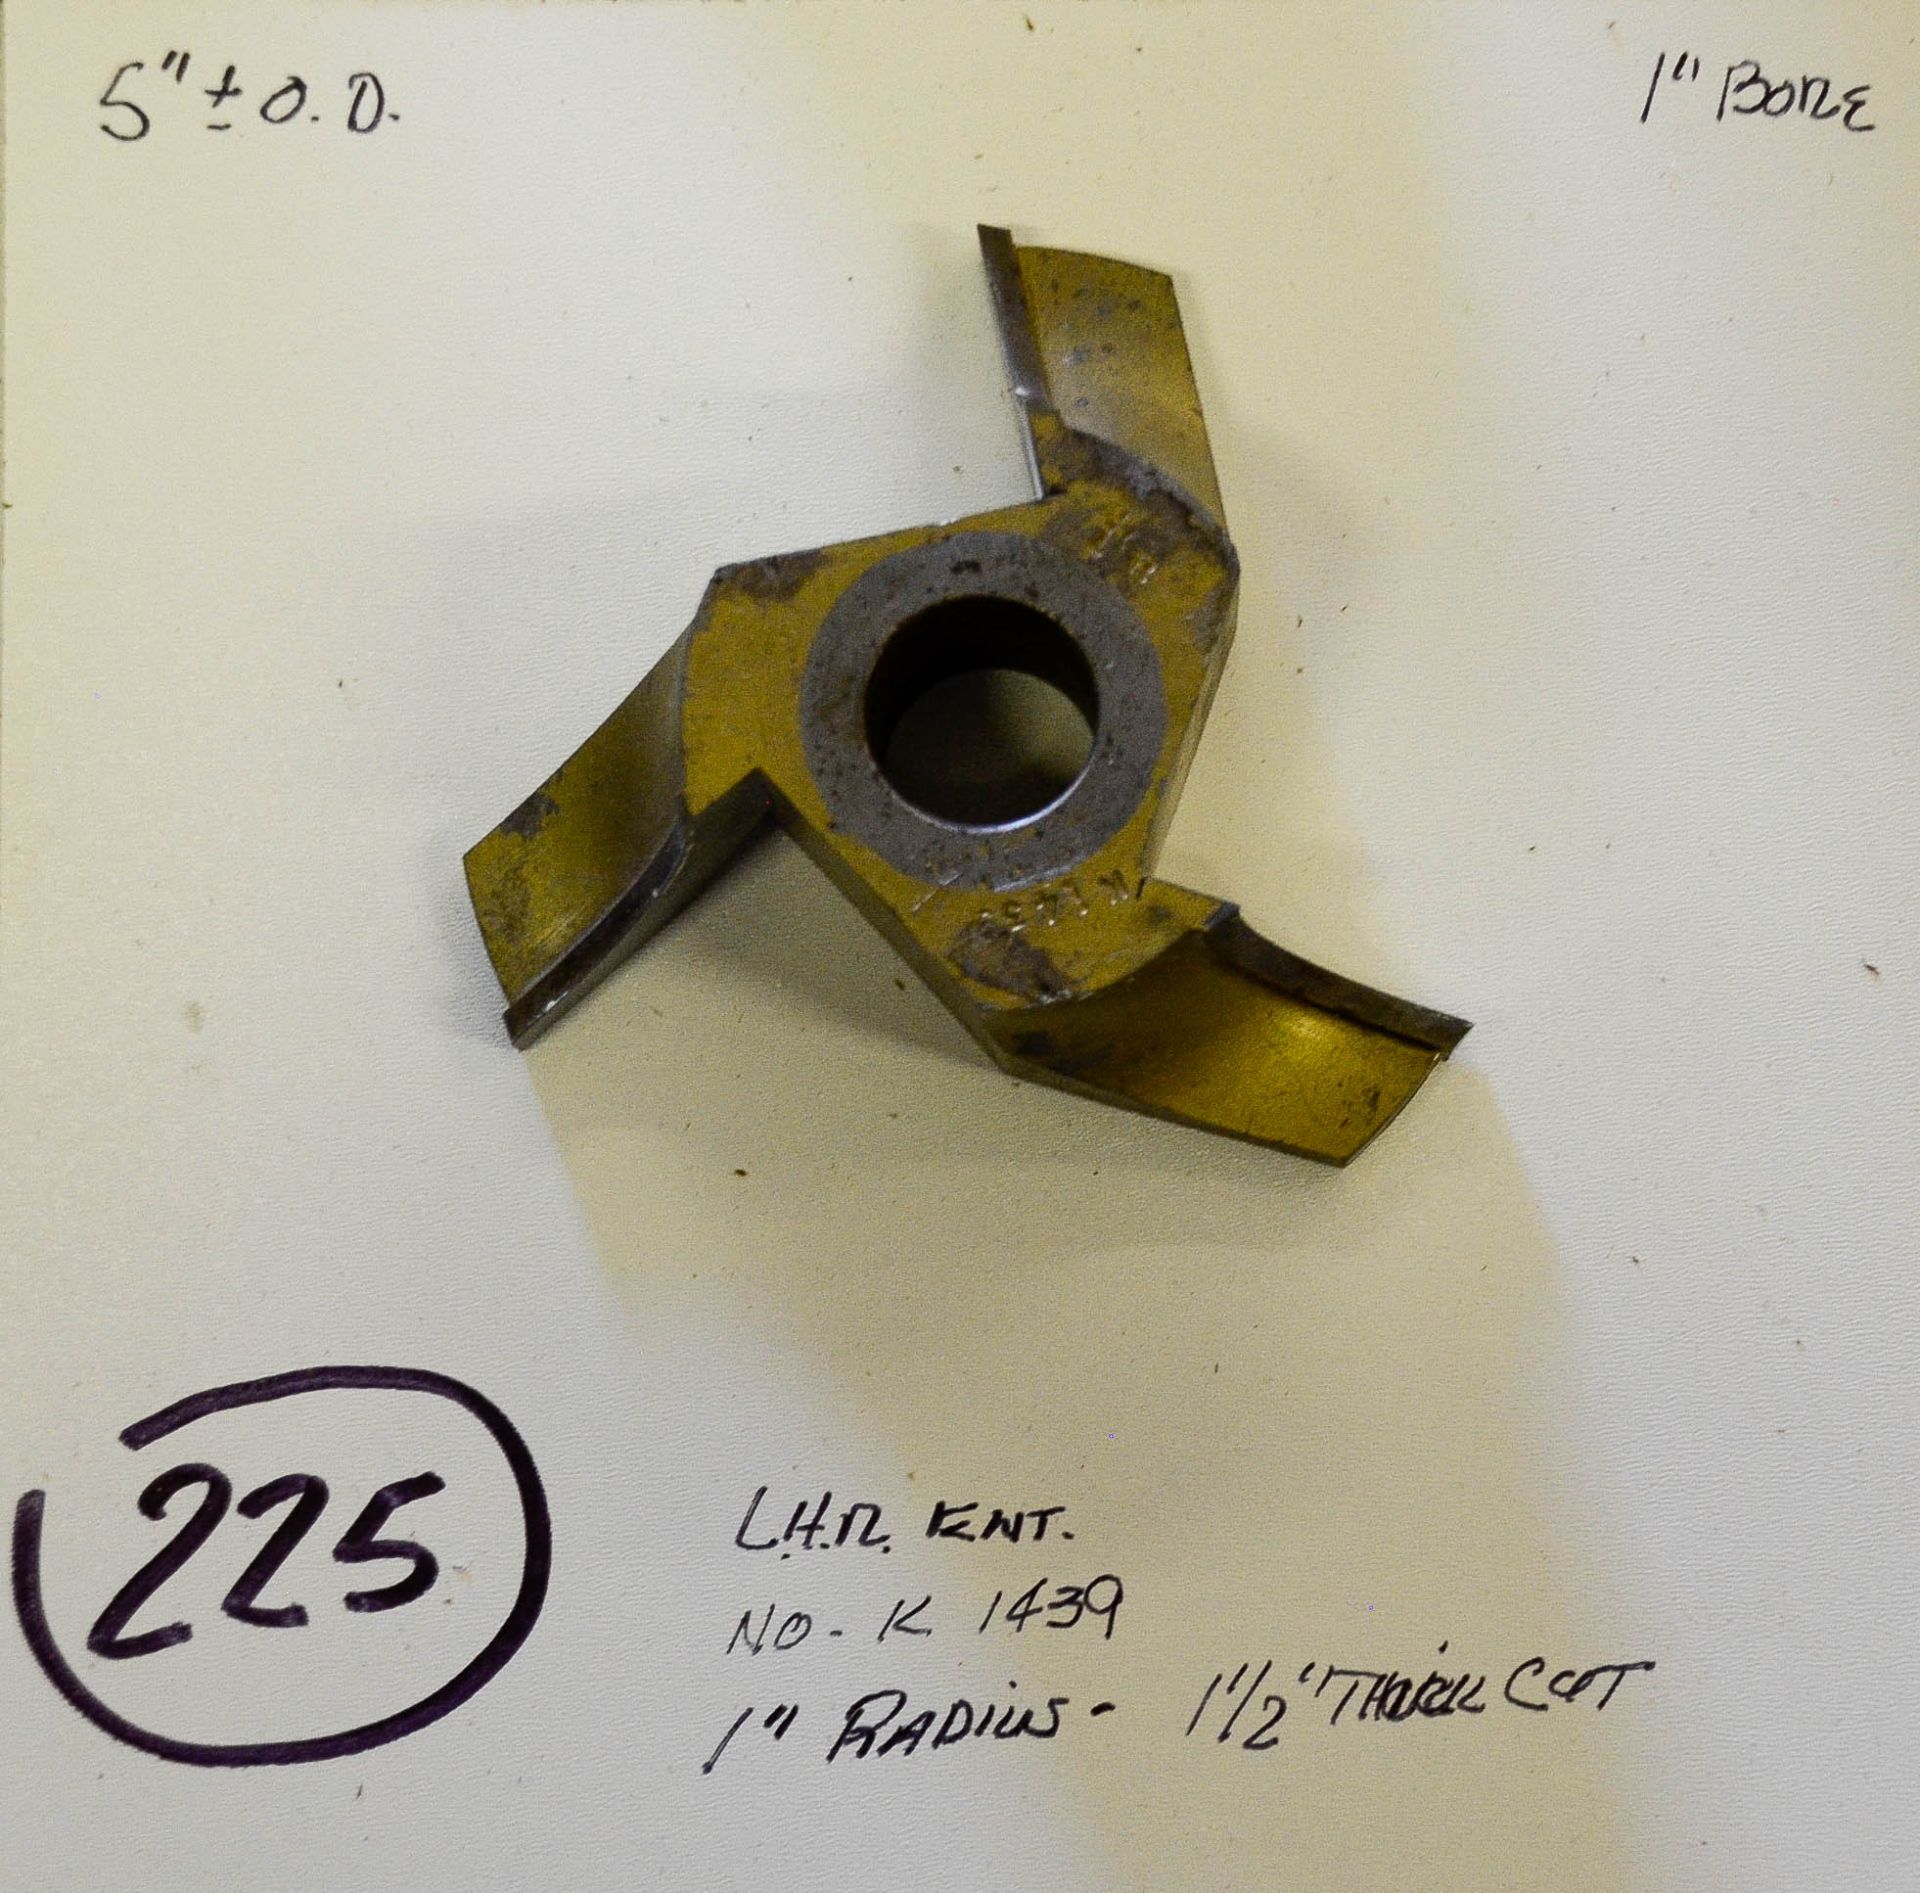 Shaper Cutter, L.R.H. ENT. K 1439, 1" Radius or Roundover, 1-1/2" Thick Cut, 5" Outside Diamete